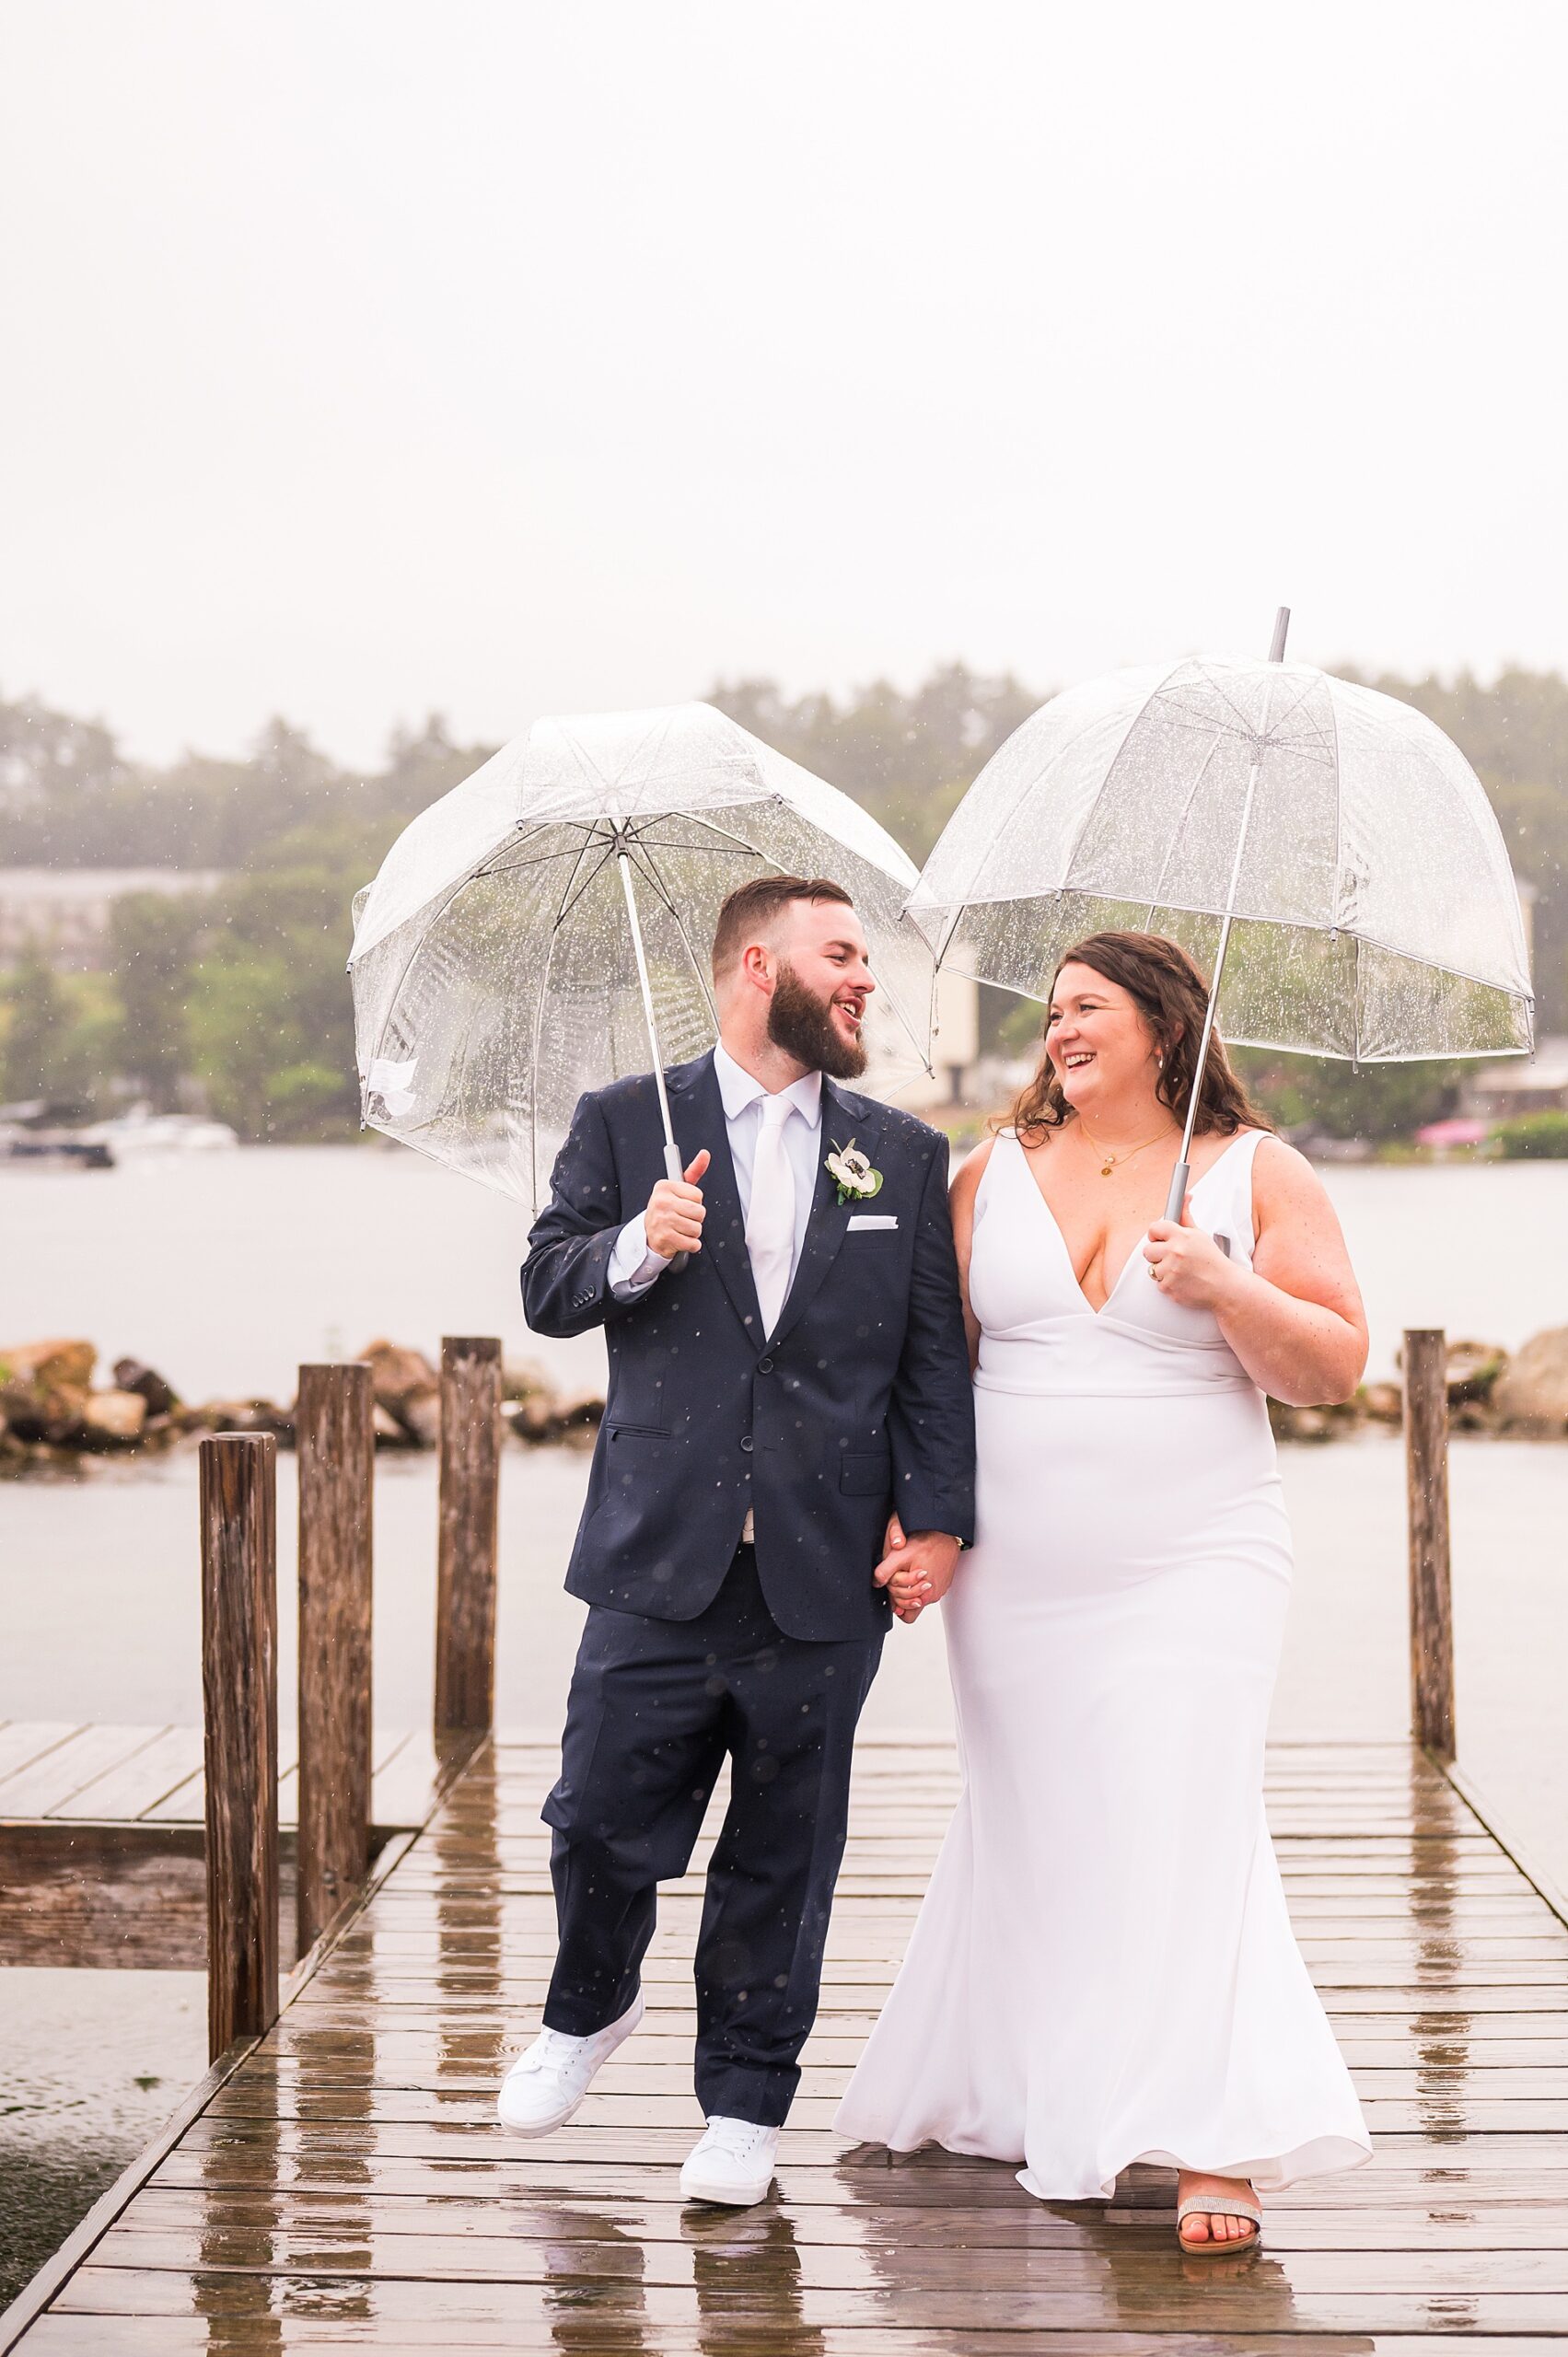 newlyweds walk the docks by the lake in the rain 